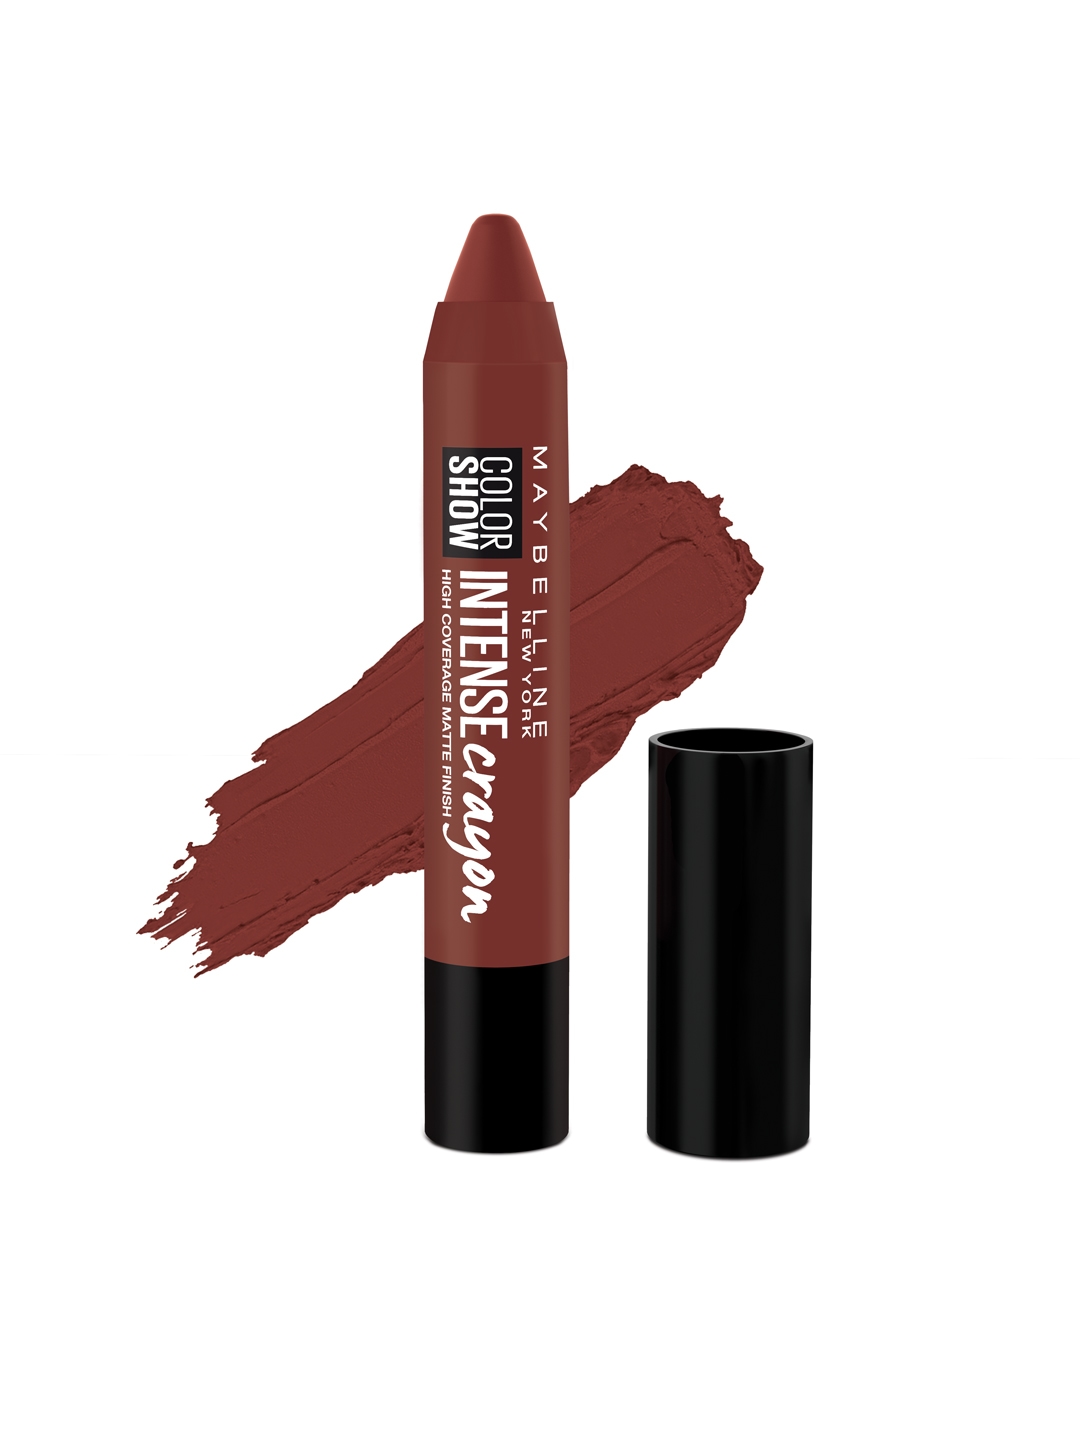 Maybelline New York Color Show Intense Crayon Lipstick   Dark Chocolate